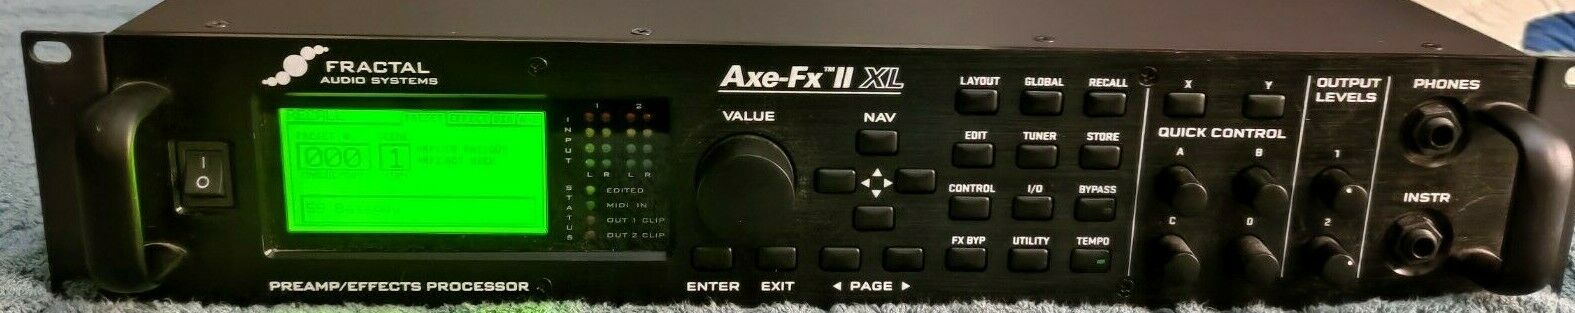 Fractal Audio Axe-fx Ii Xl